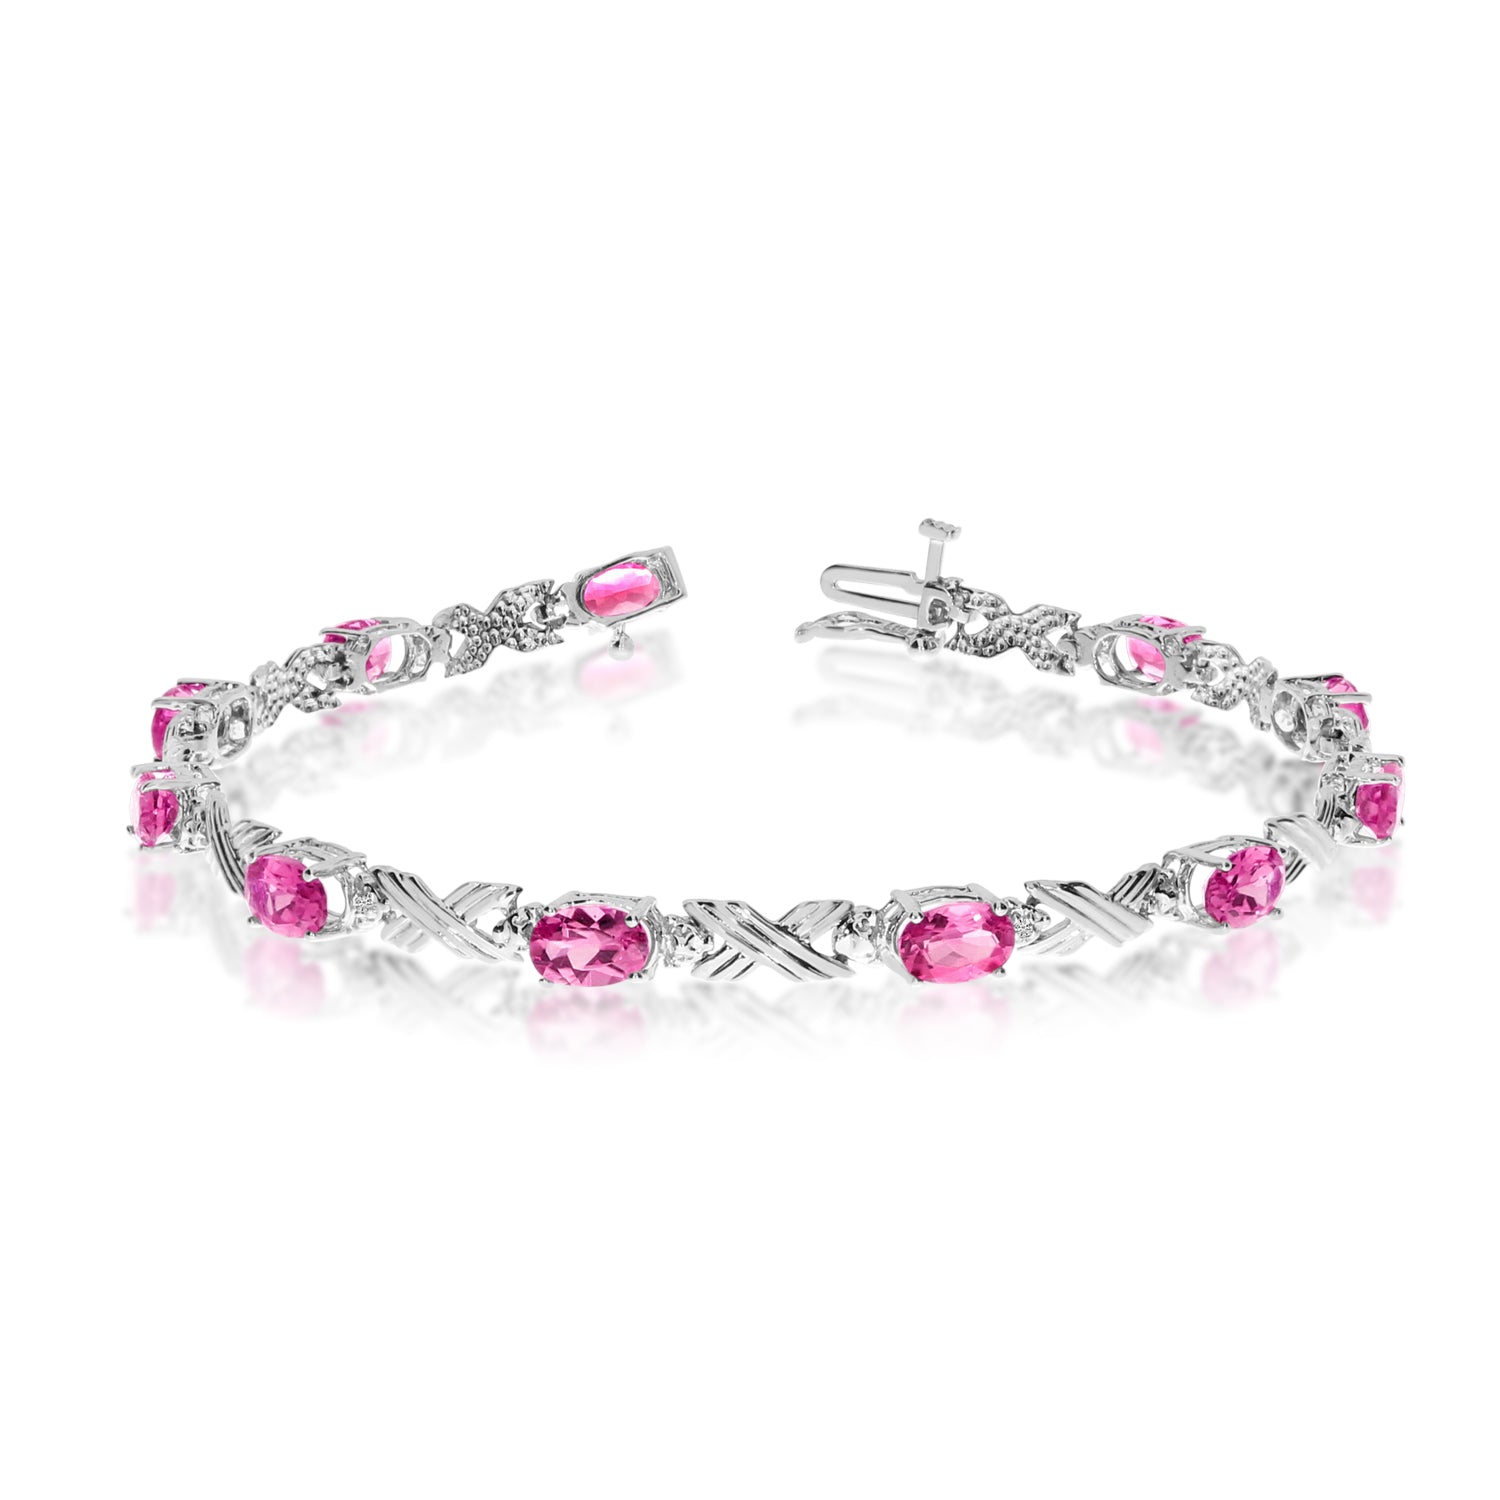 10K White Gold Oval Pink Topaz Stones And Diamonds Tennis Bracelet, 7" fine designer jewelry for men and women